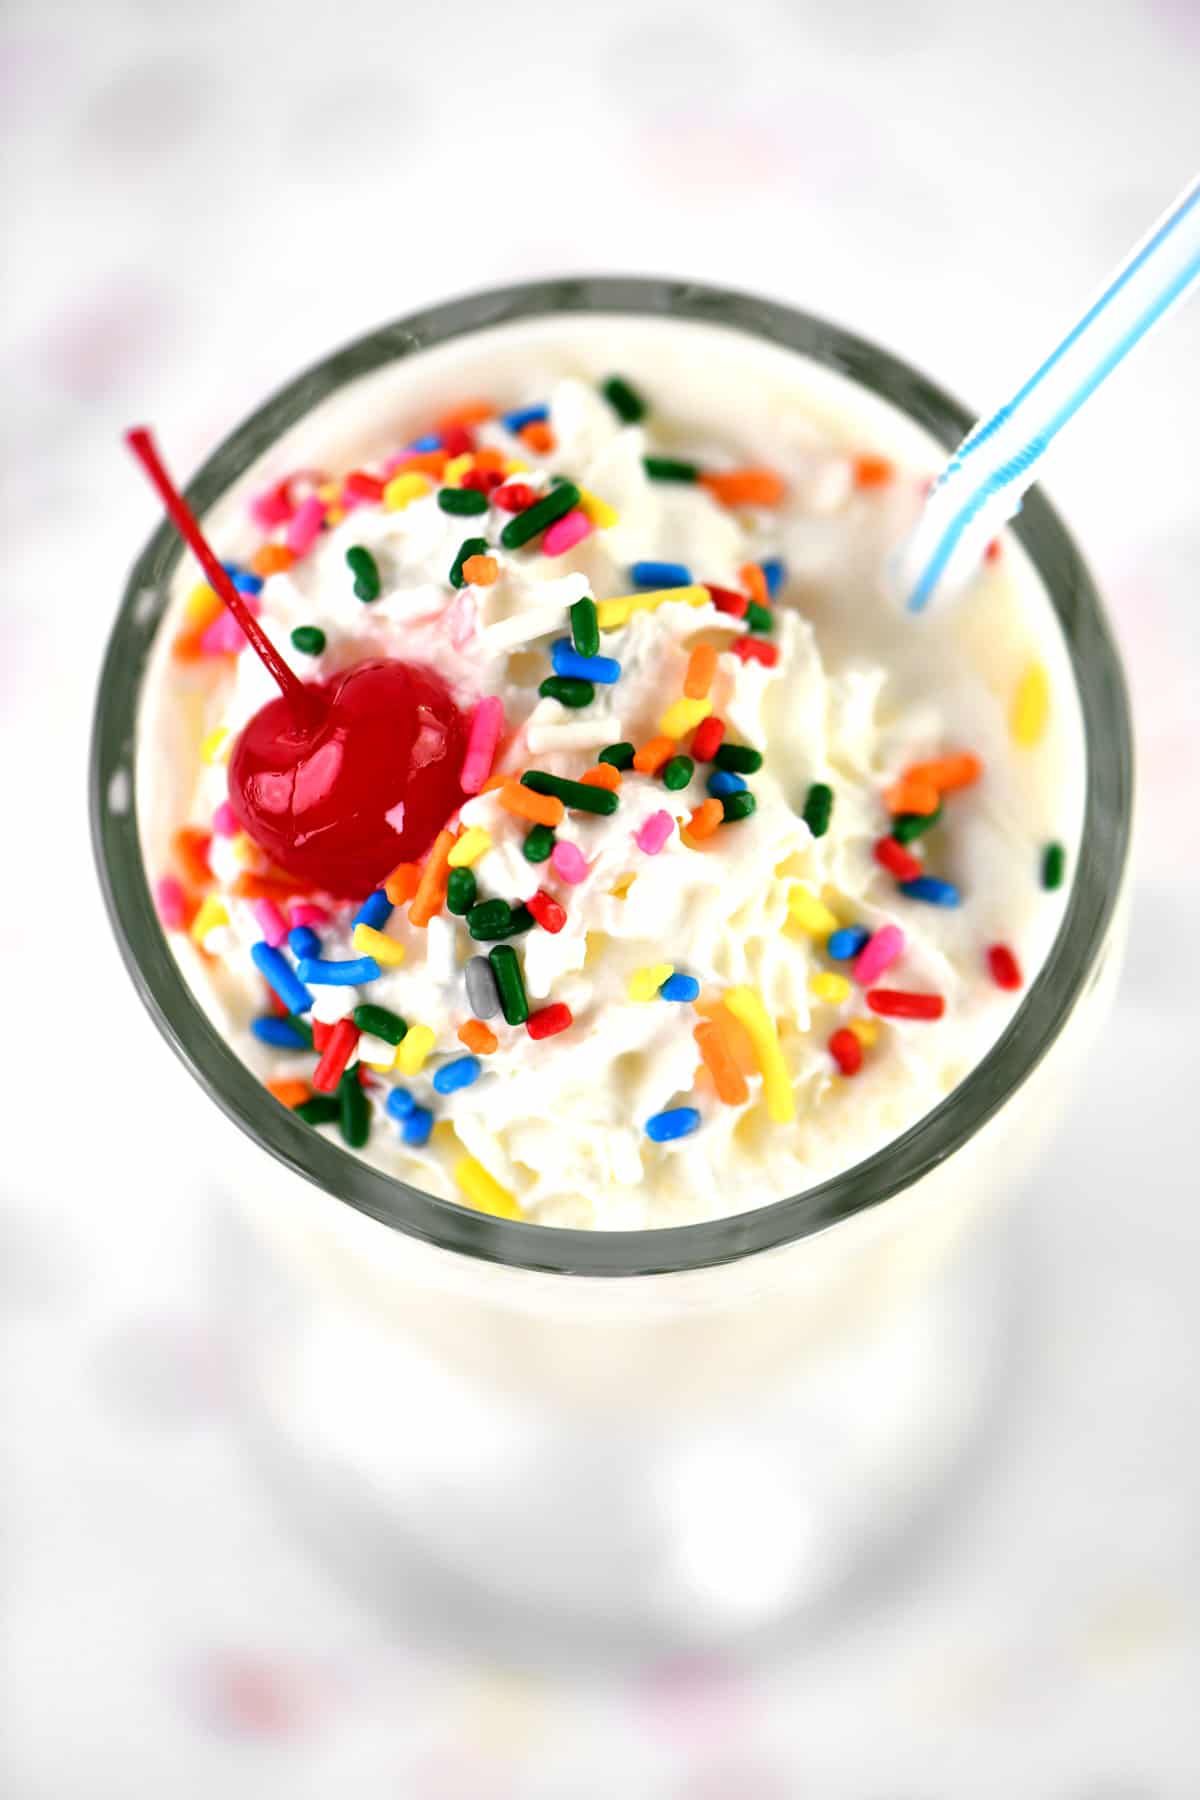 Whipped cream, a cherry and sprinkles on a vanilla milkshake.